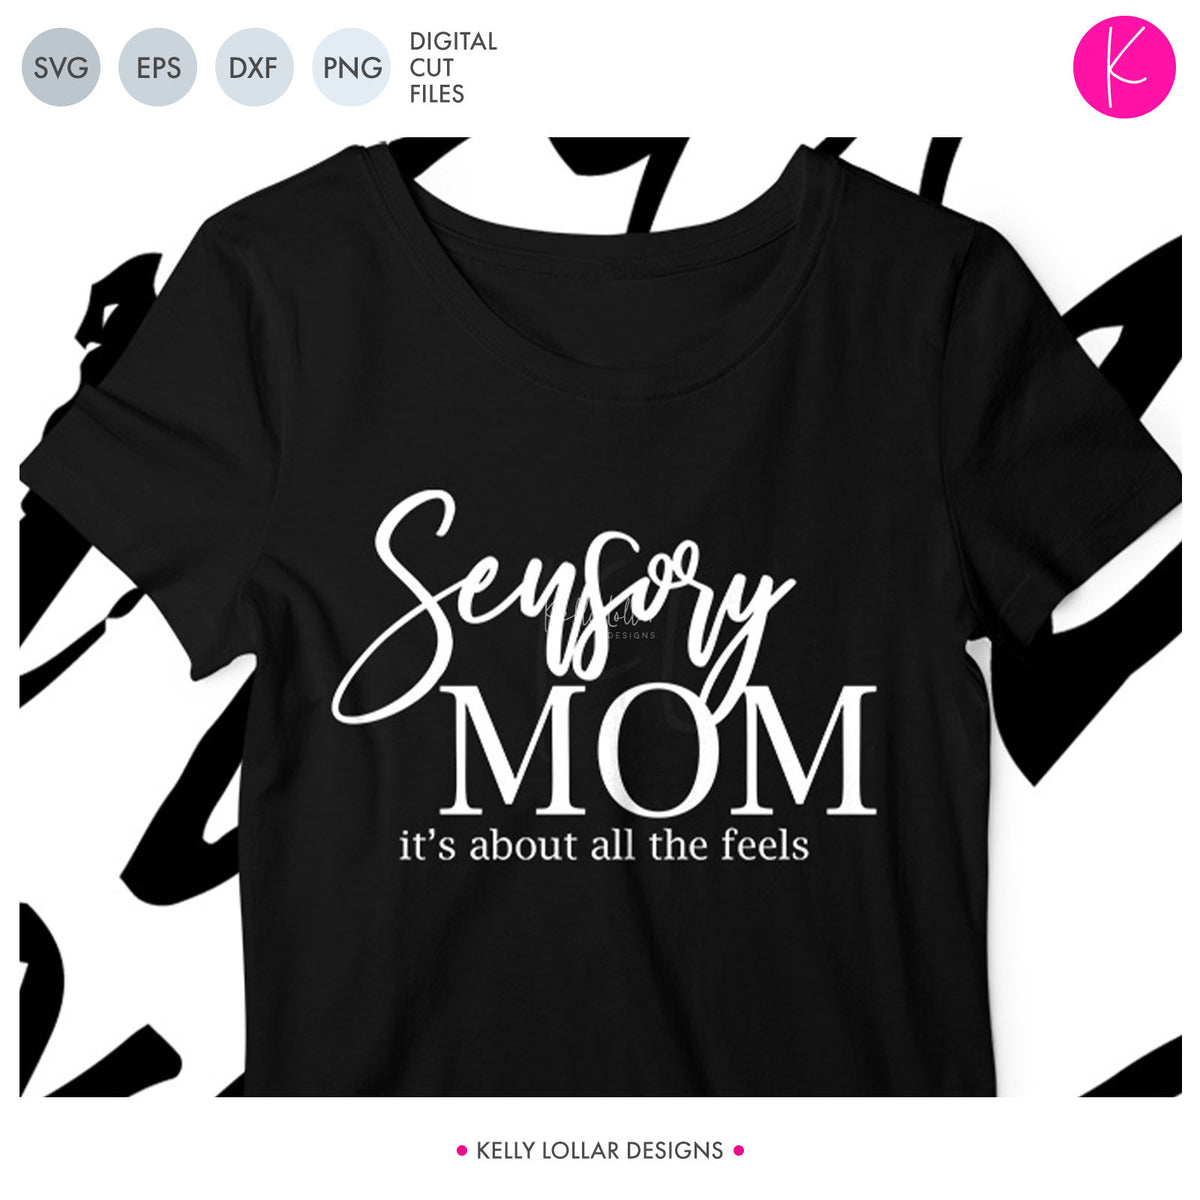 Sensory Mom | SVG DXF EPS PNG Cut Files